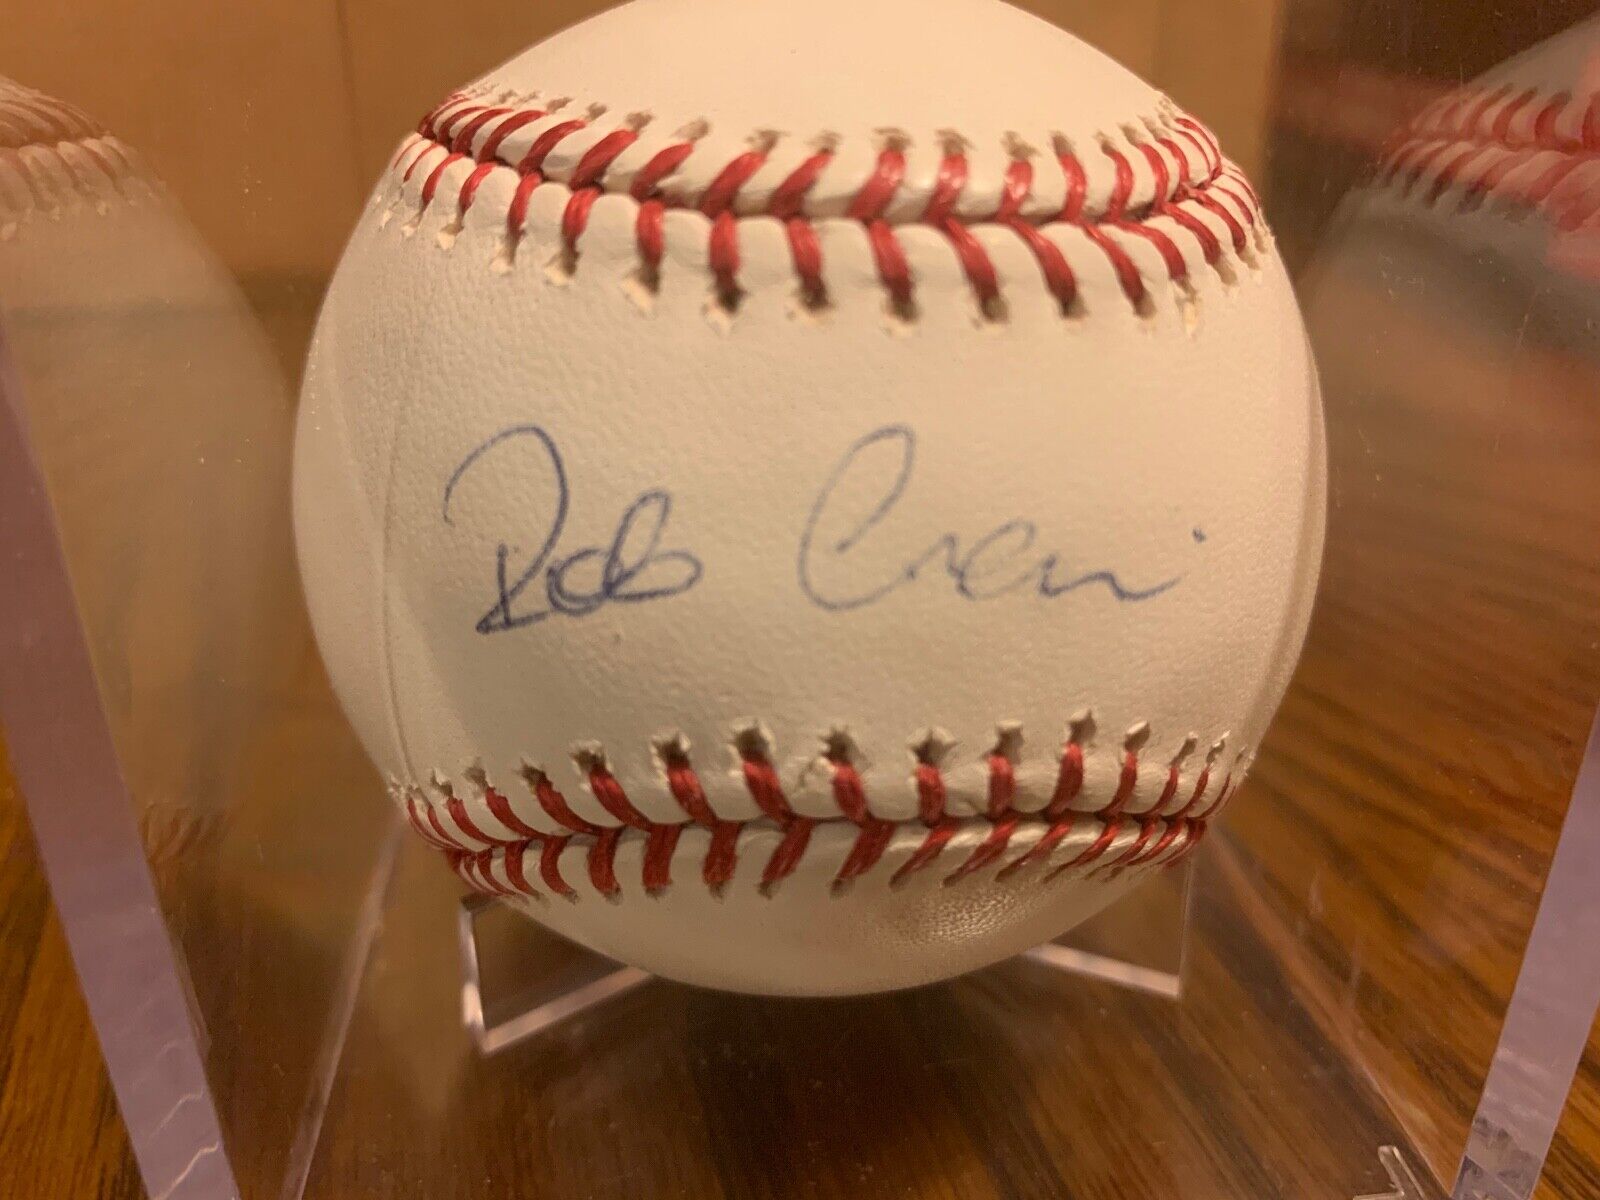 Robinson Cano Mets Yankees Signed Autographed Baseball W/ PSA COA AI78670 MLB